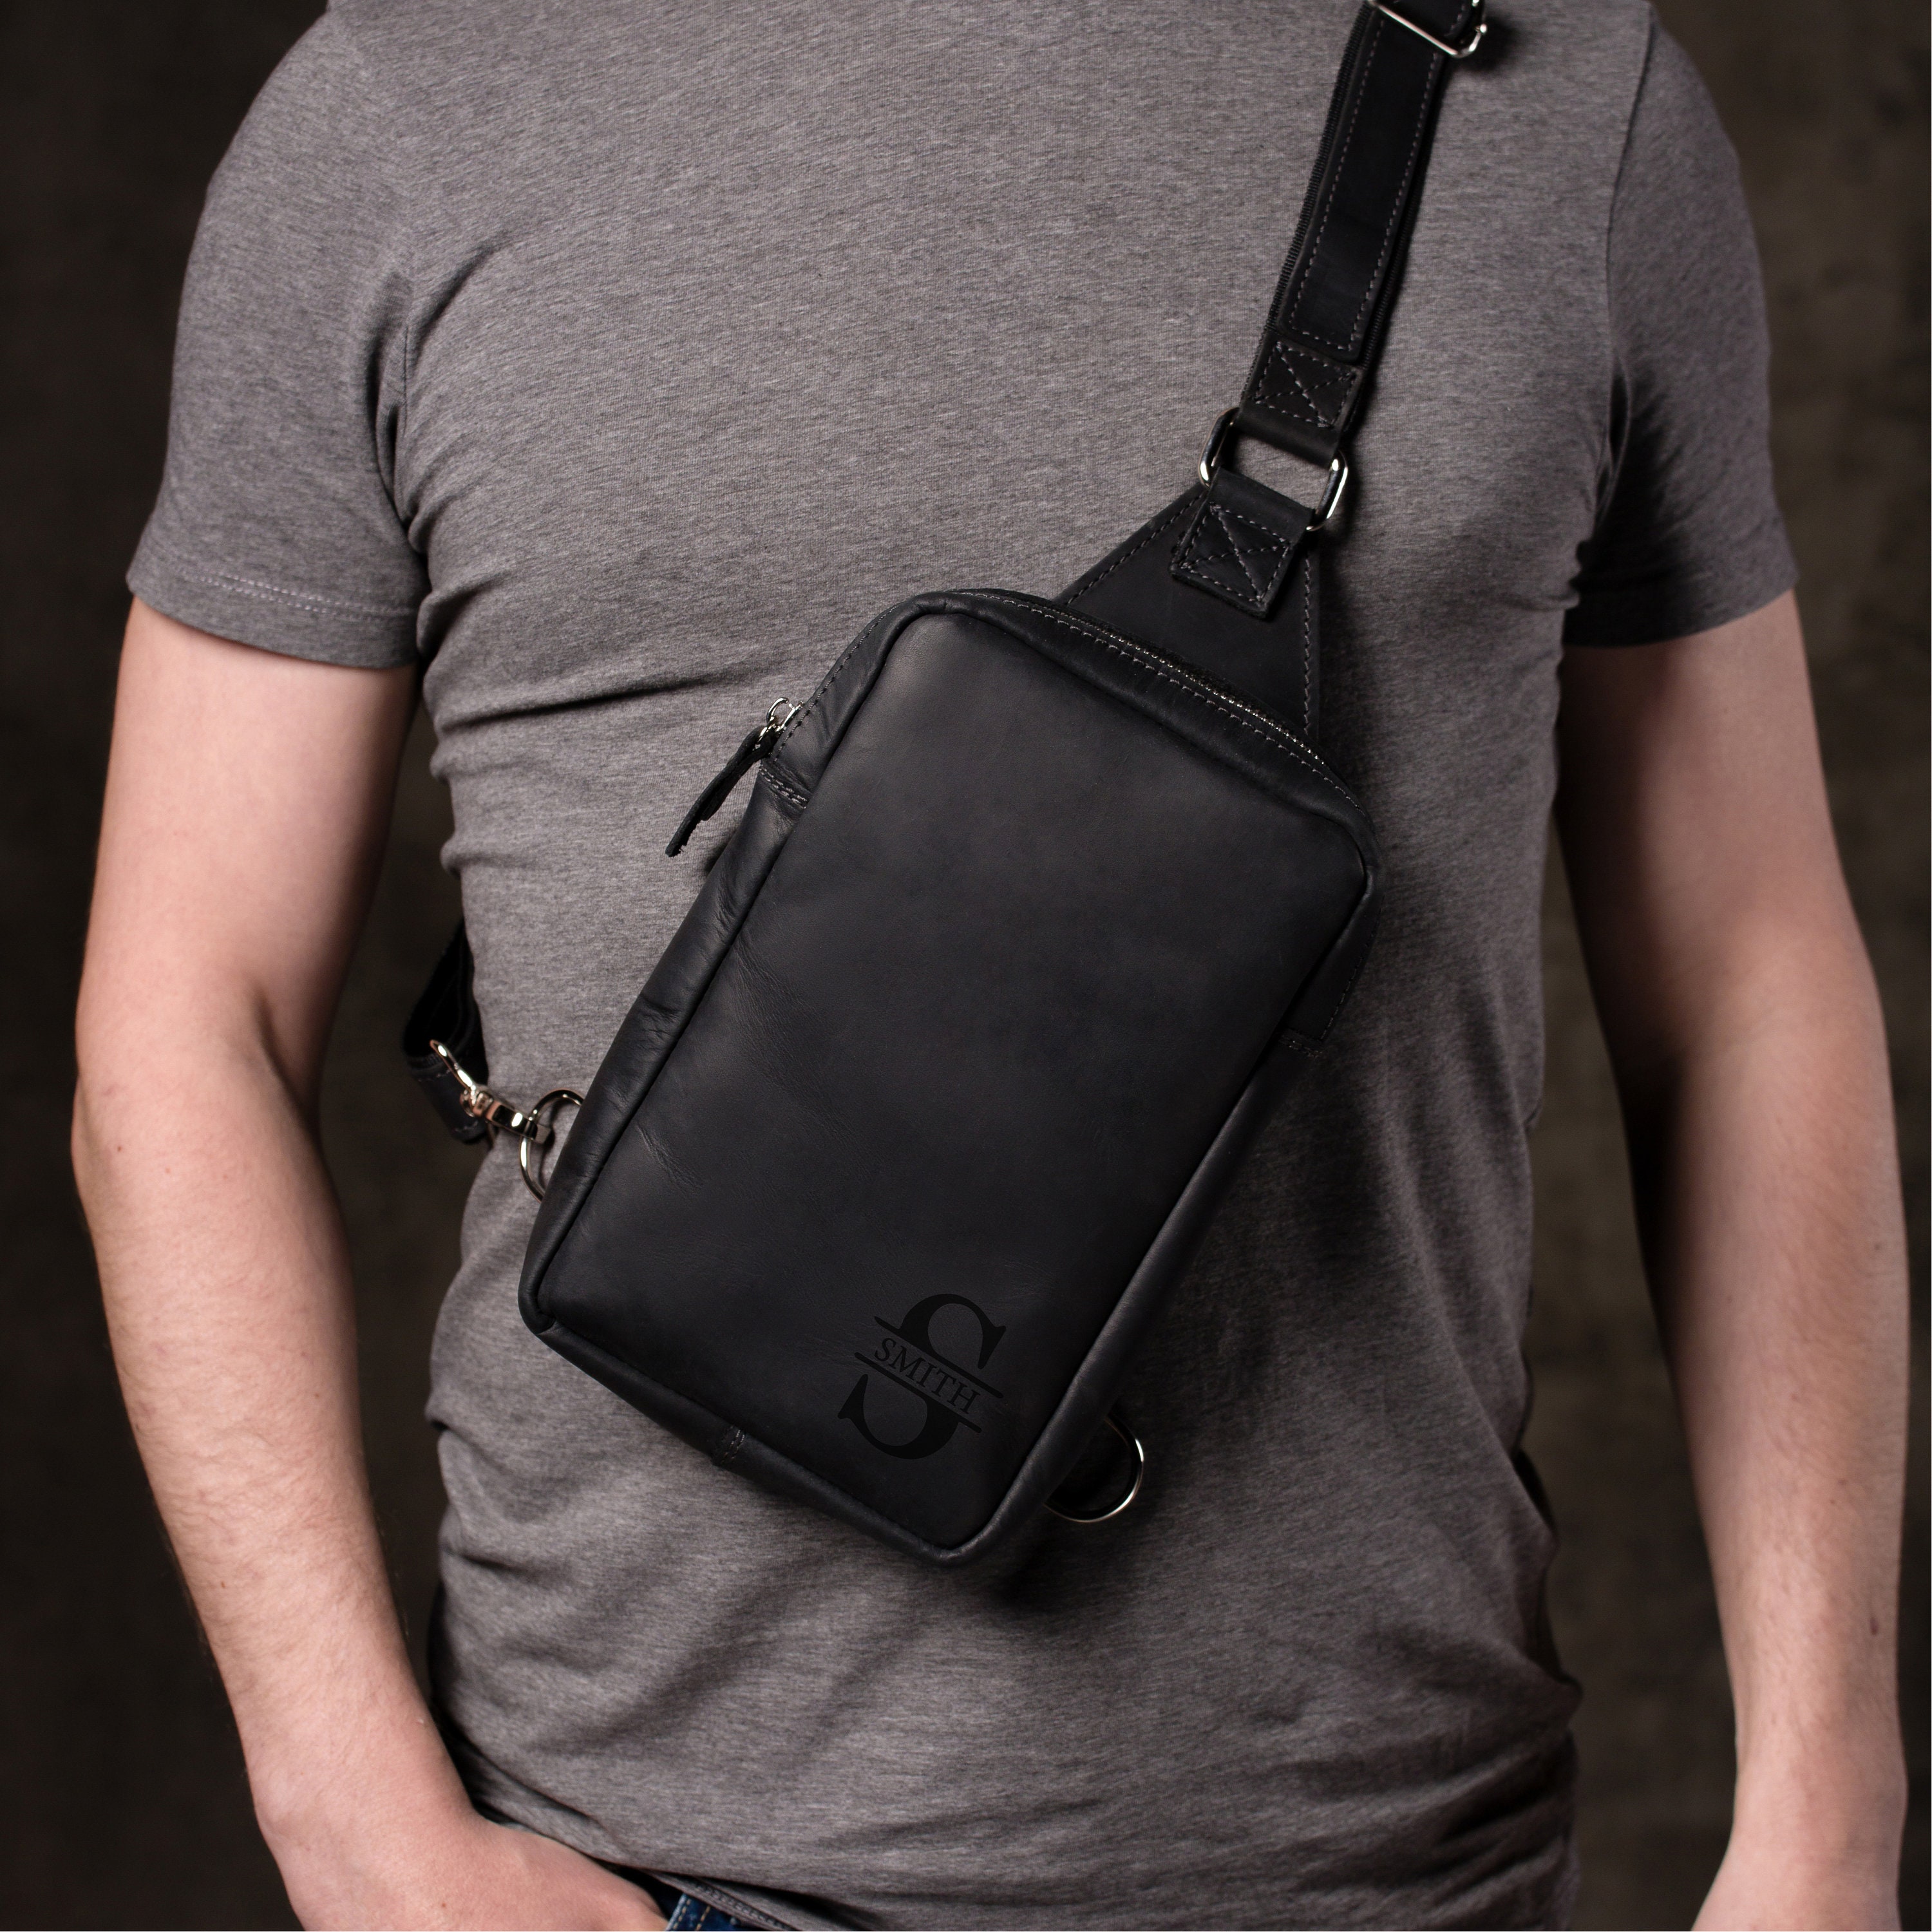 Personalized Leather Sling Bag, Mens Chest Bag, Tactical Travel Purse, City Shoulder Bag, Crossbody Purse with Adjustable Shoulder Strap